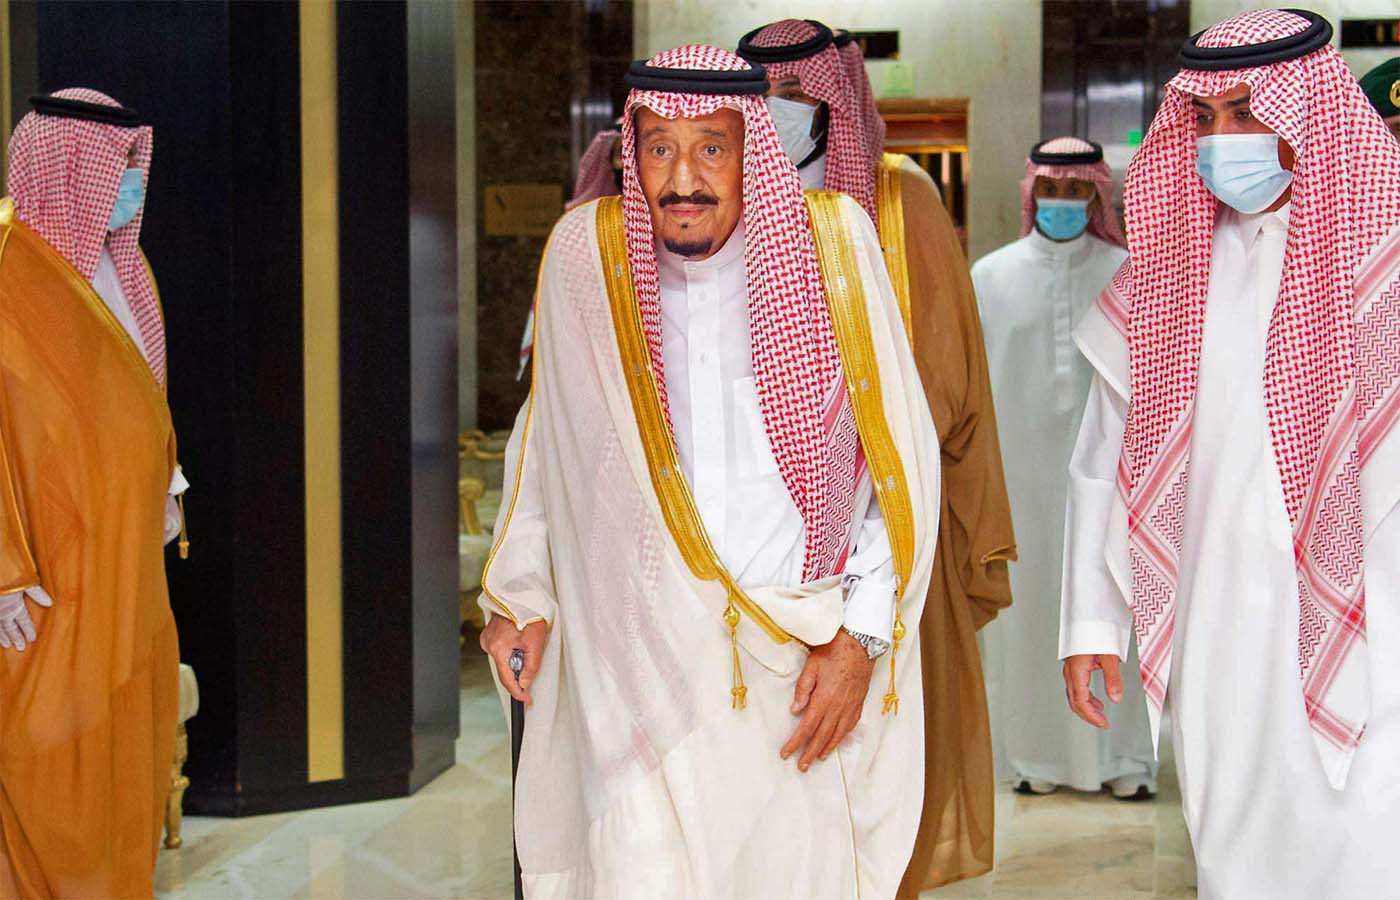 Saudi King Salman bin Abdulaziz leaving the hospital after successful surgery operation